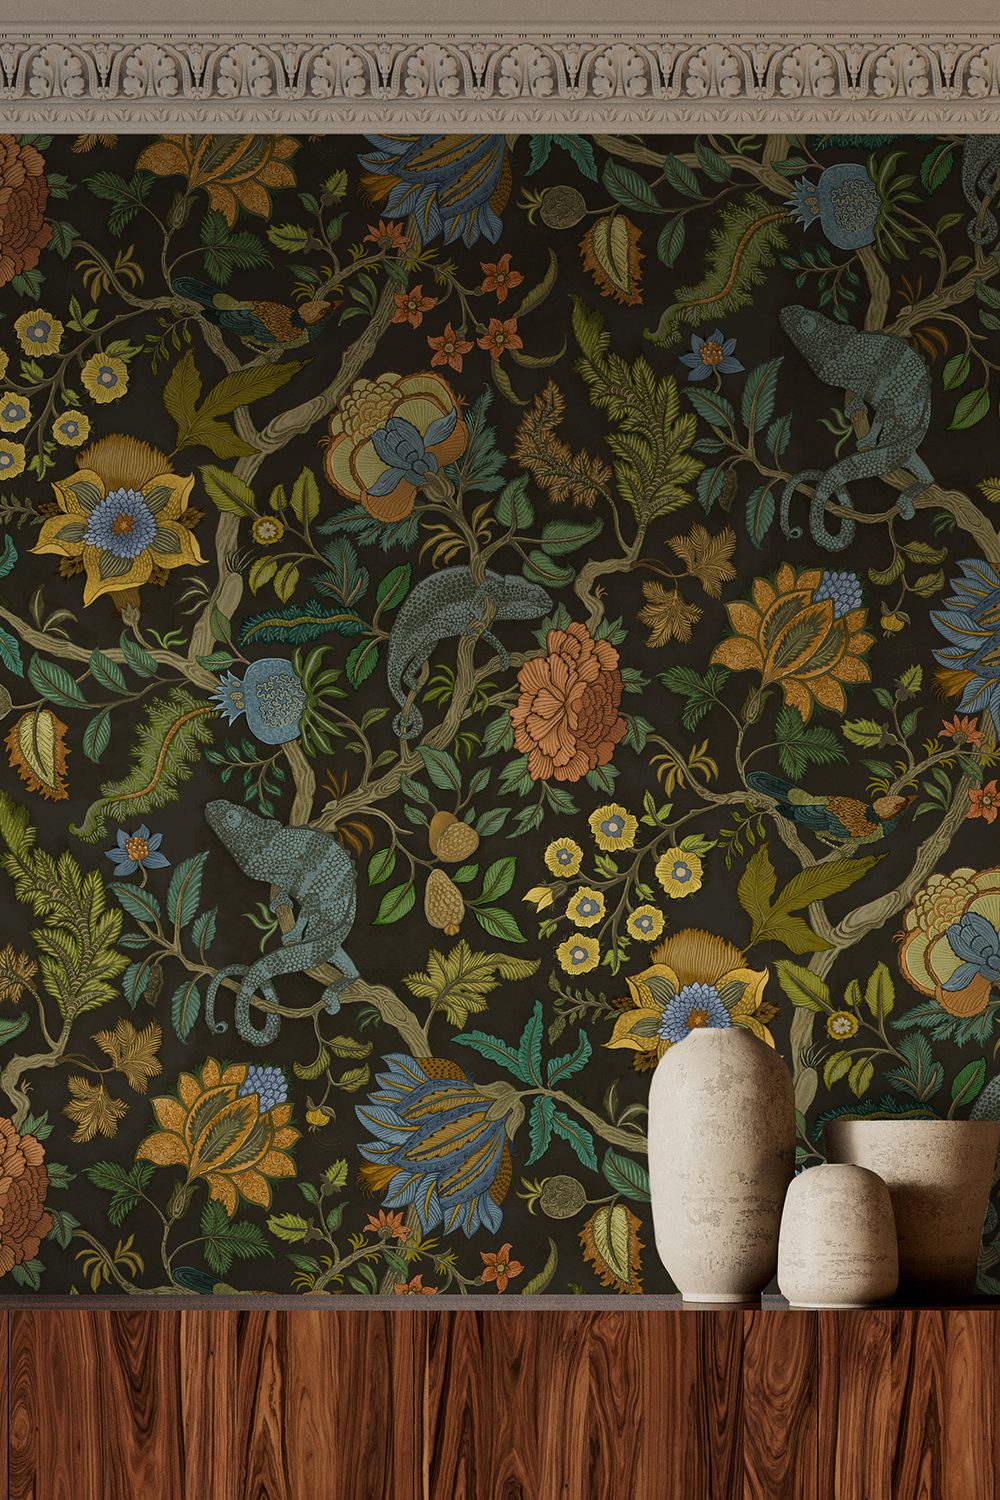 Josephine-munsey-wallpapers-interiors-chameleon-trail-floral-green-blue-black-orange-wallpaper